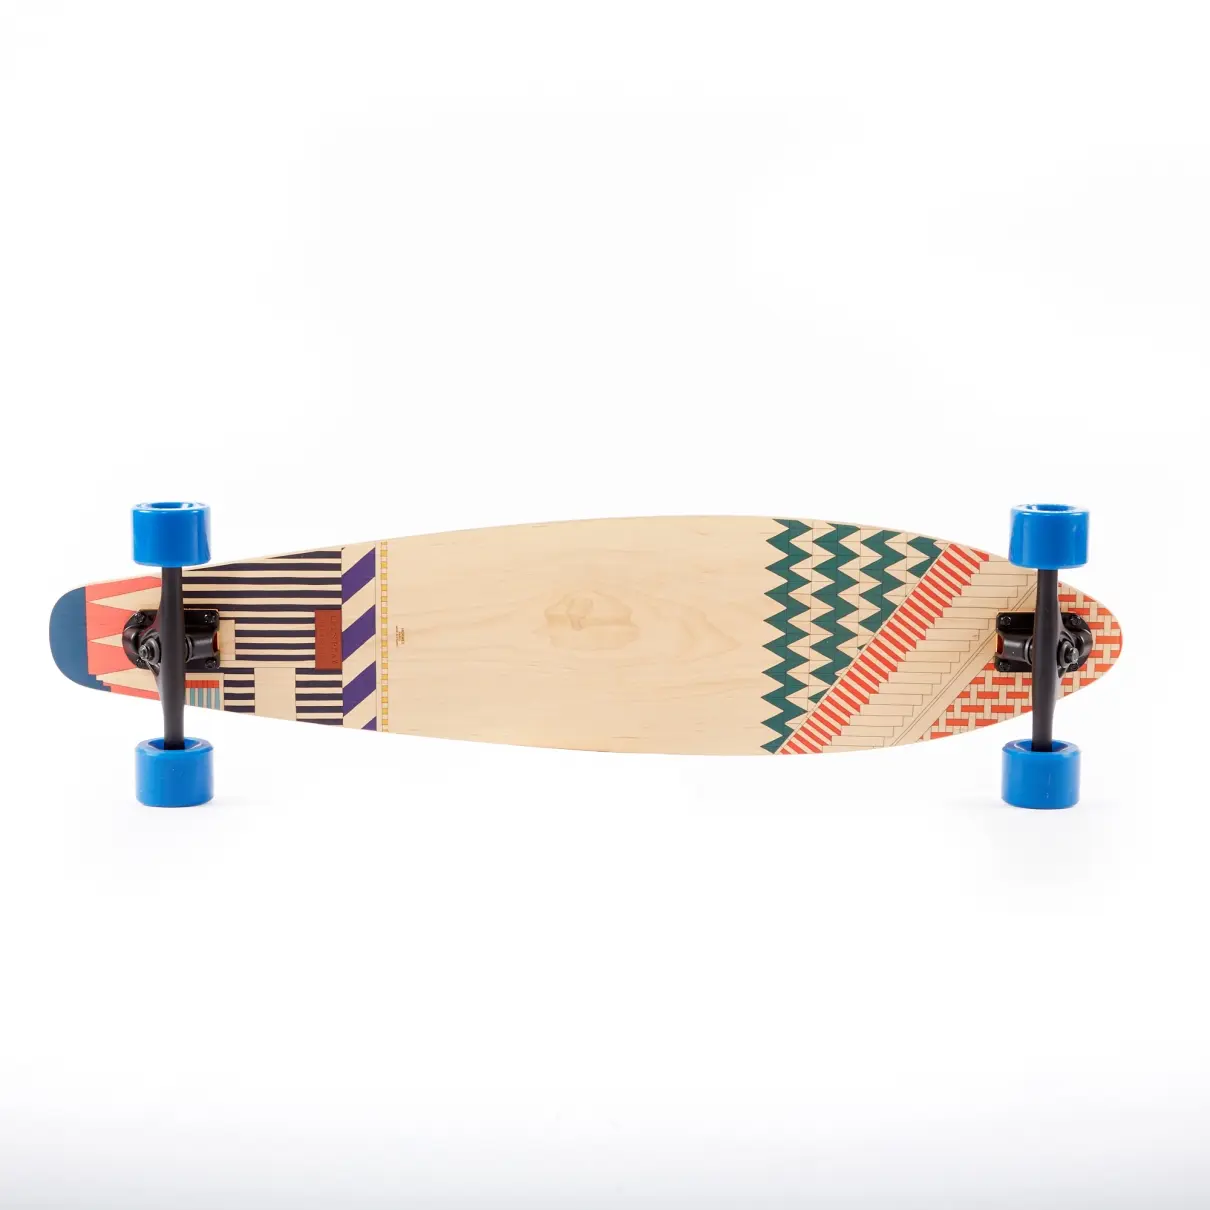 Buy Hermès Multicolour Wood Boards online